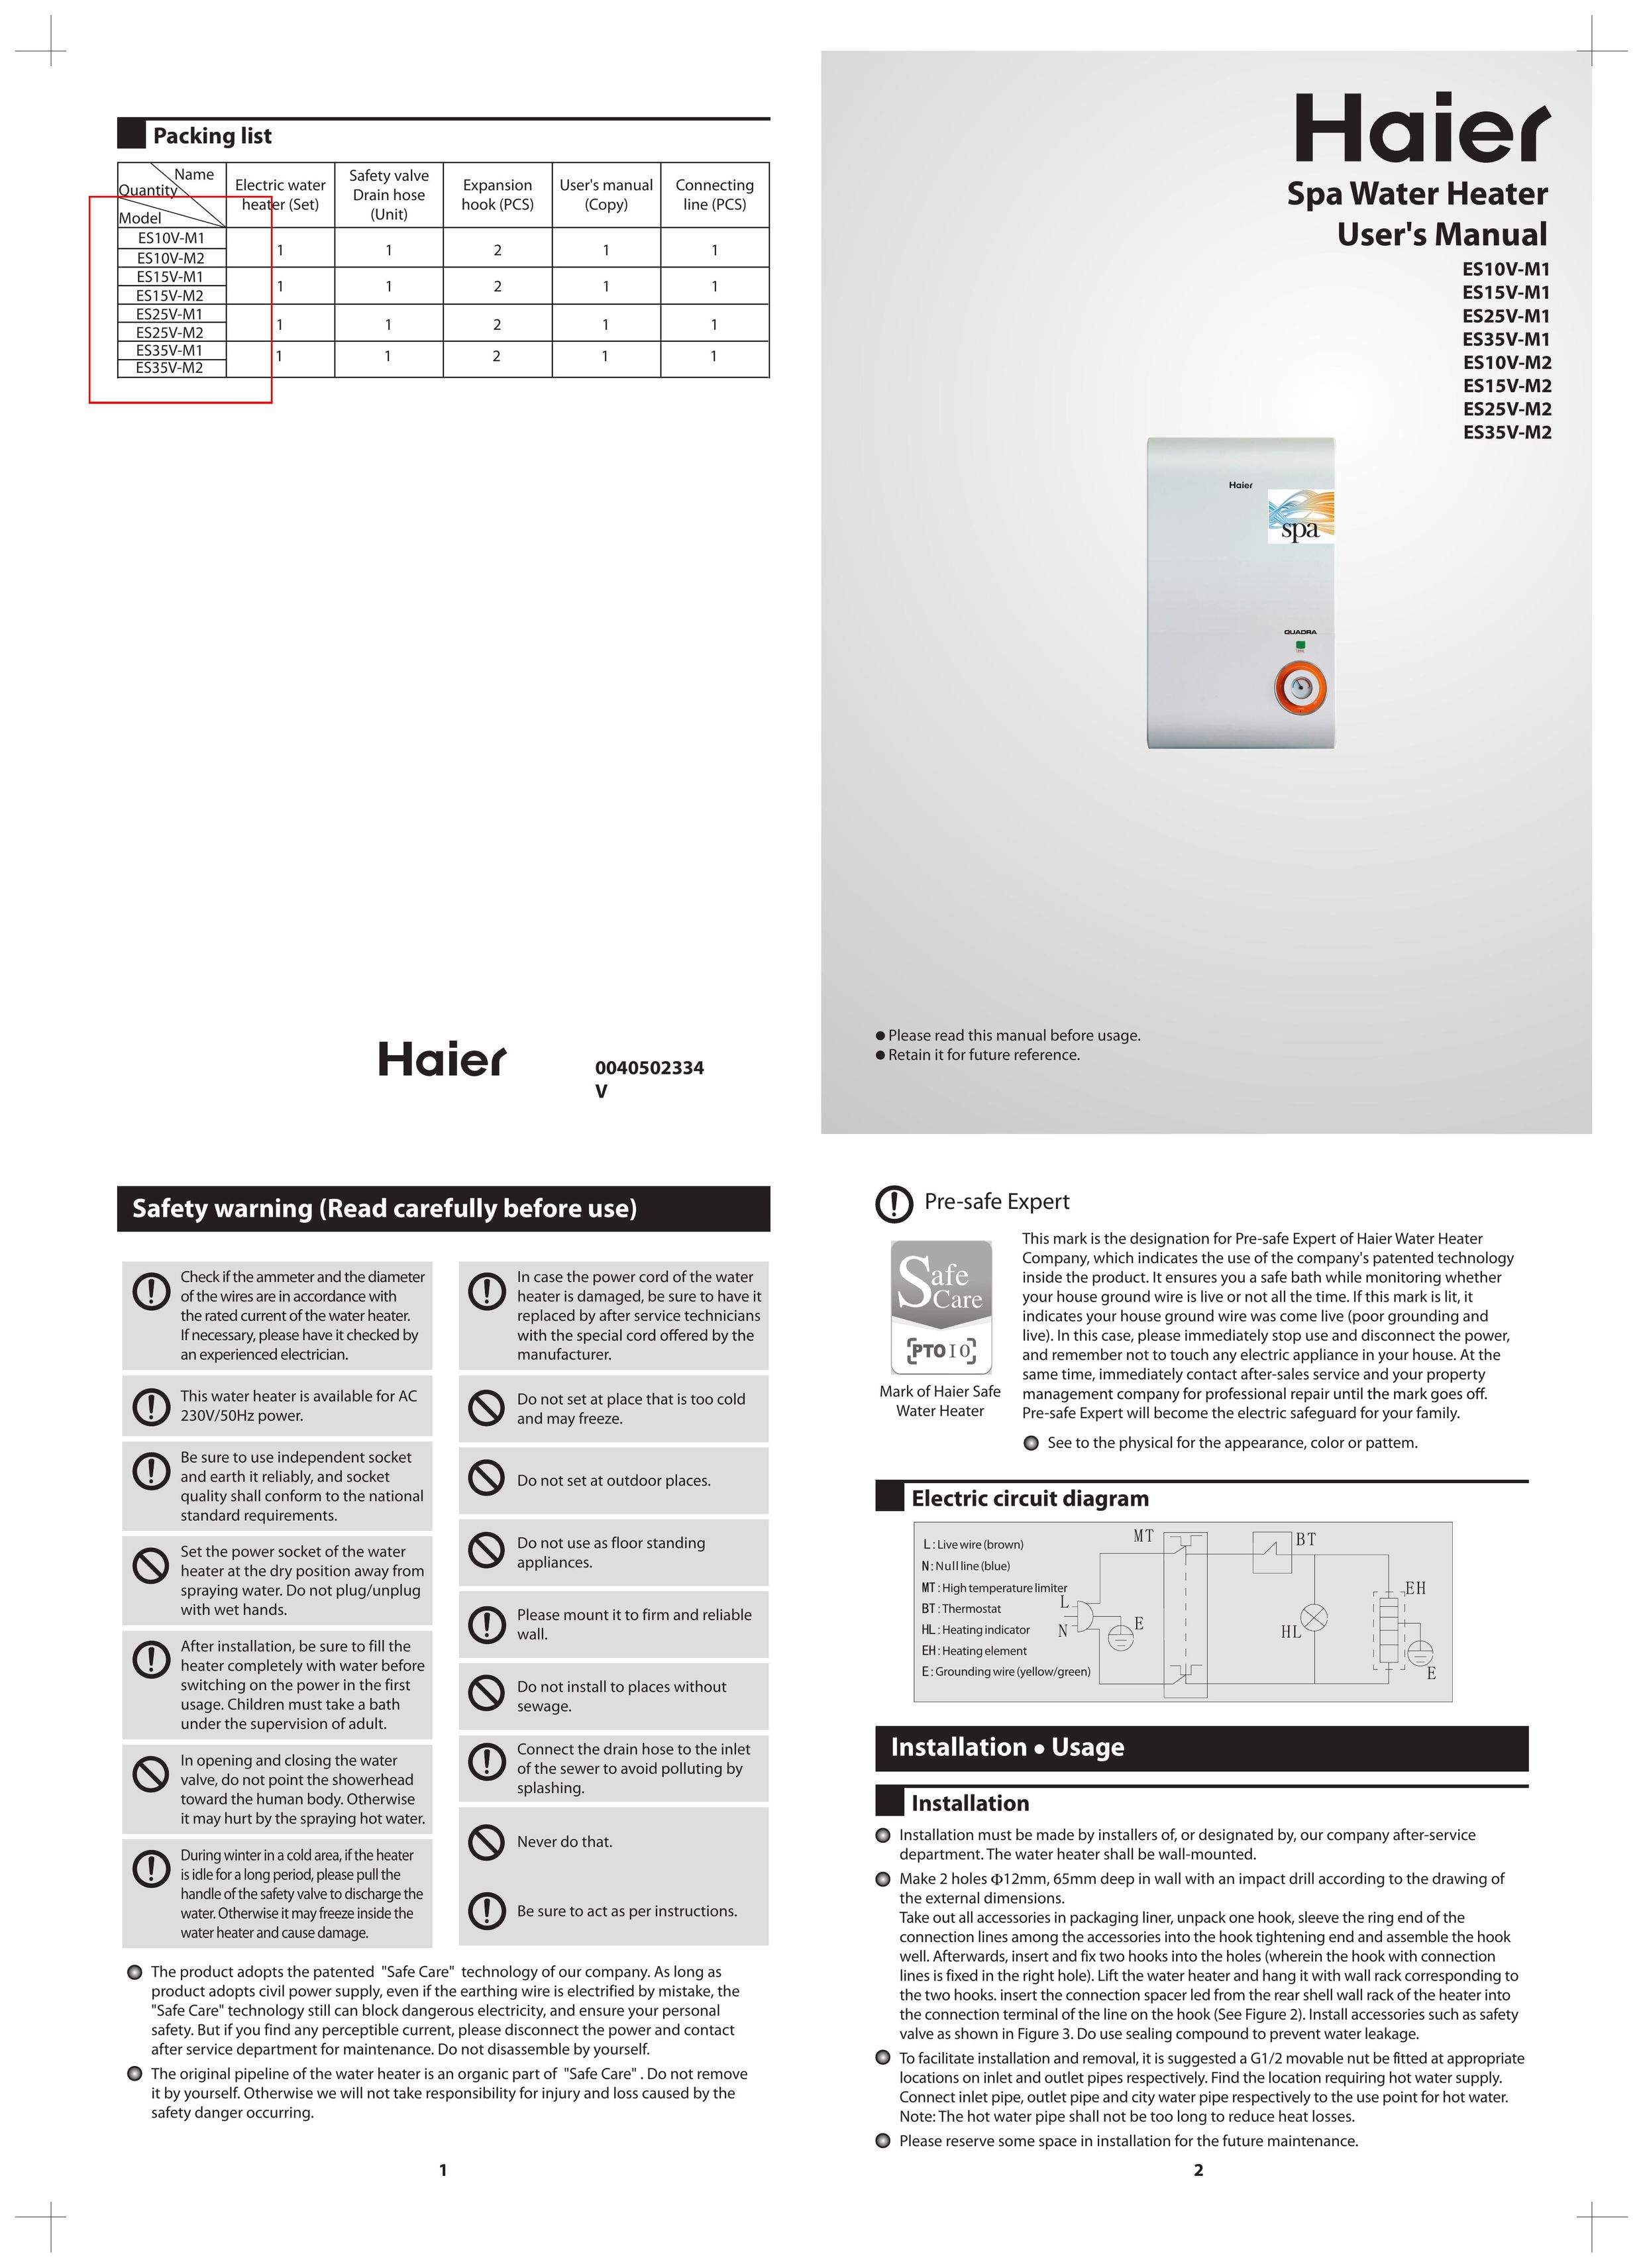 Haier ES10V-M2 Water Heater User Manual